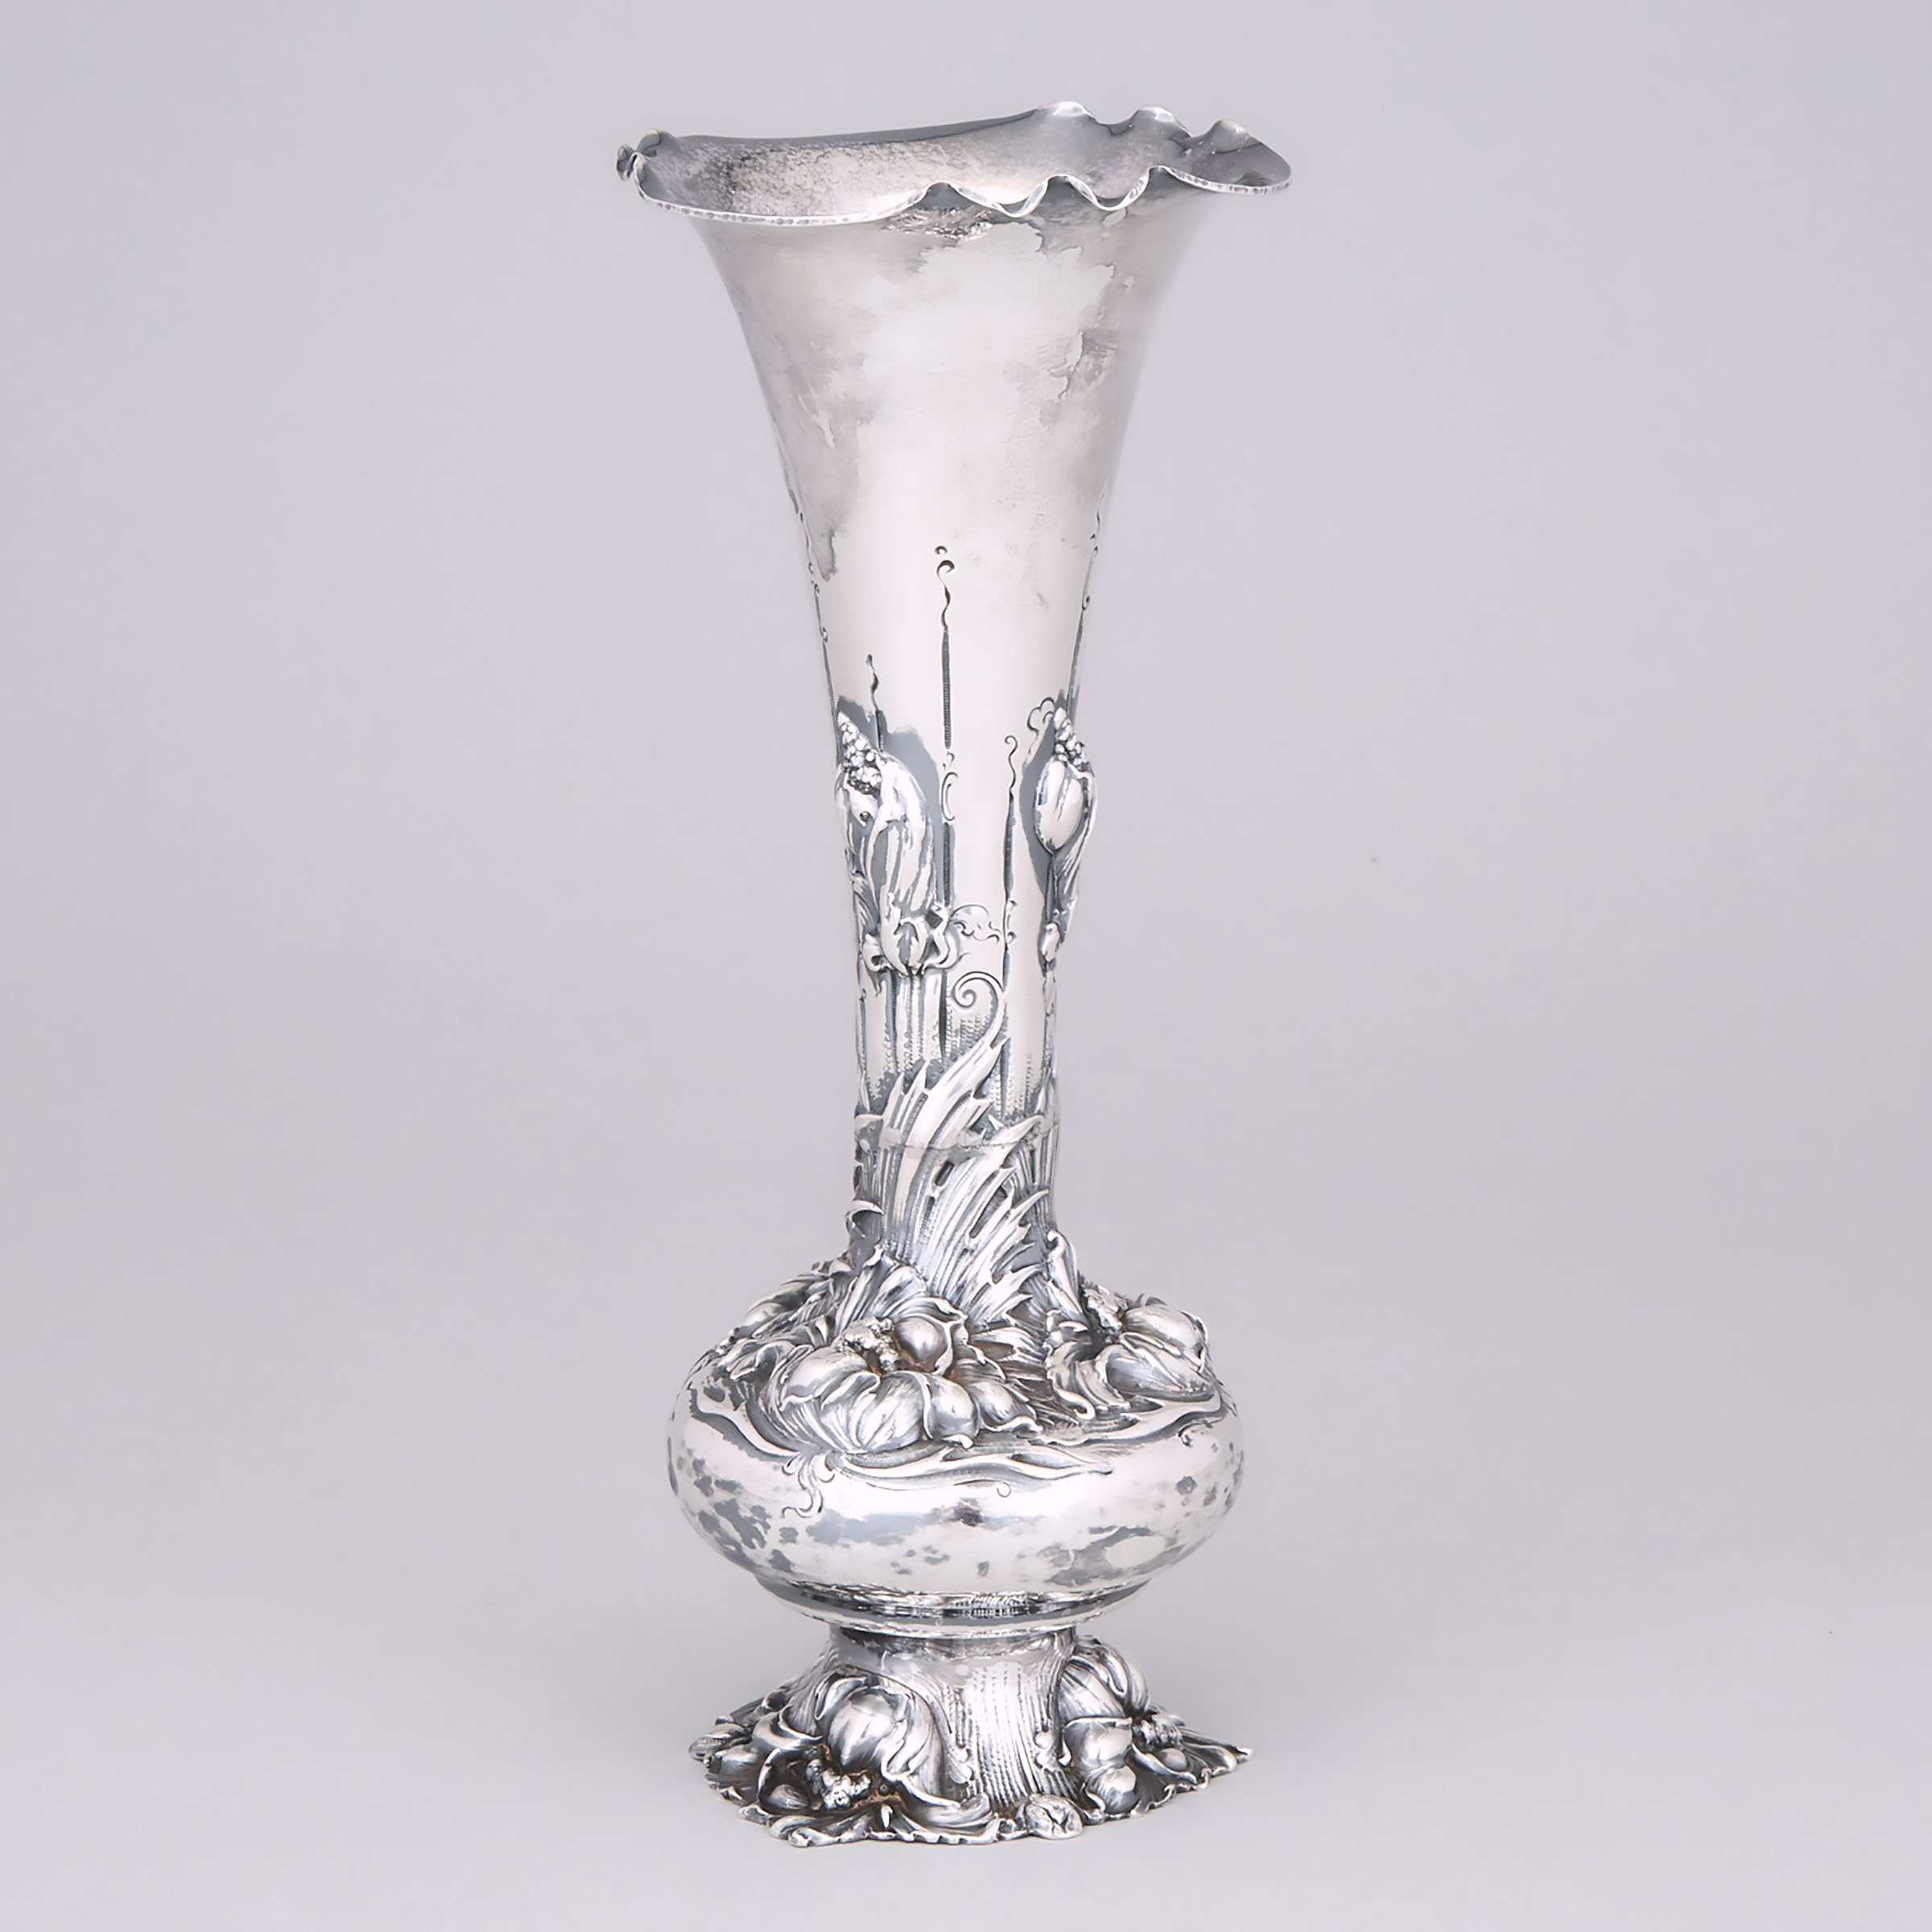 American Silver Vase, George W. Shiebler & Co., New York, N.Y., for J.C. Grogan, early 20th century